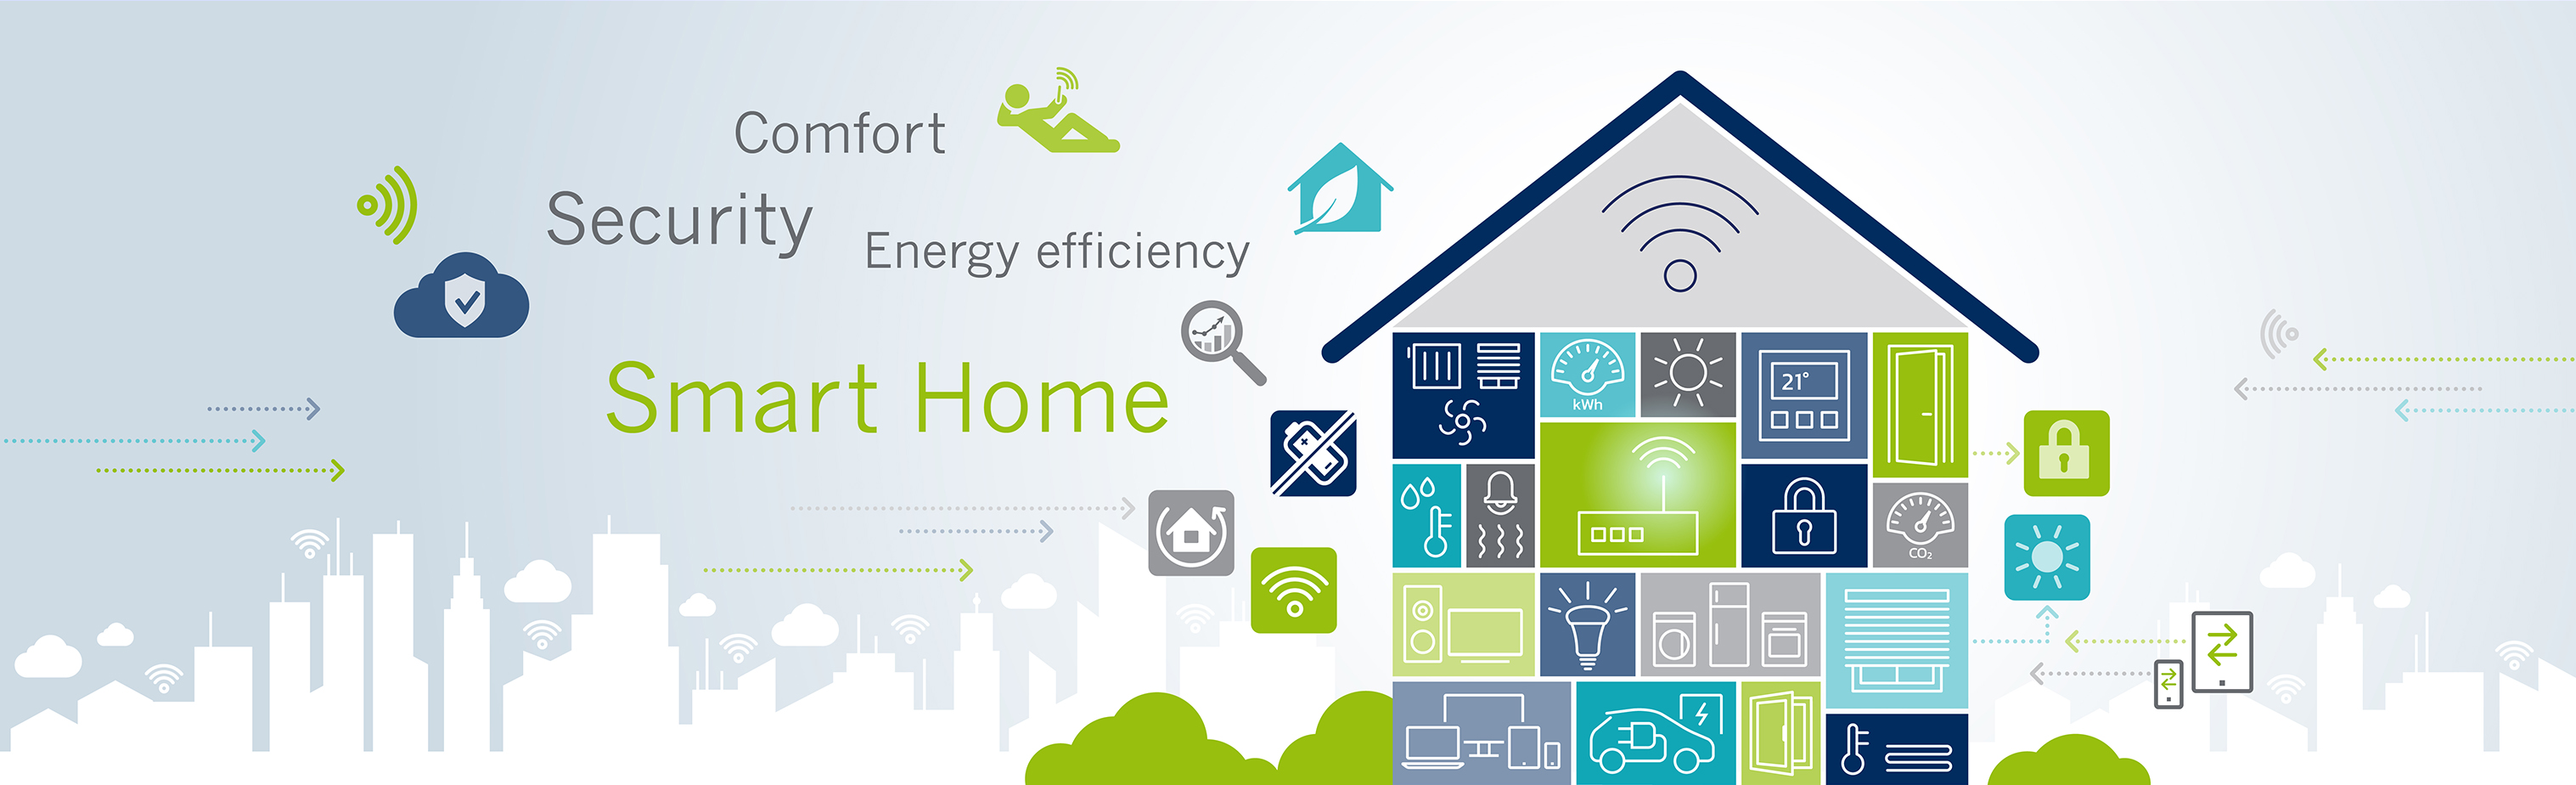 Smart Homes by EnOcean radio standard, Infographic